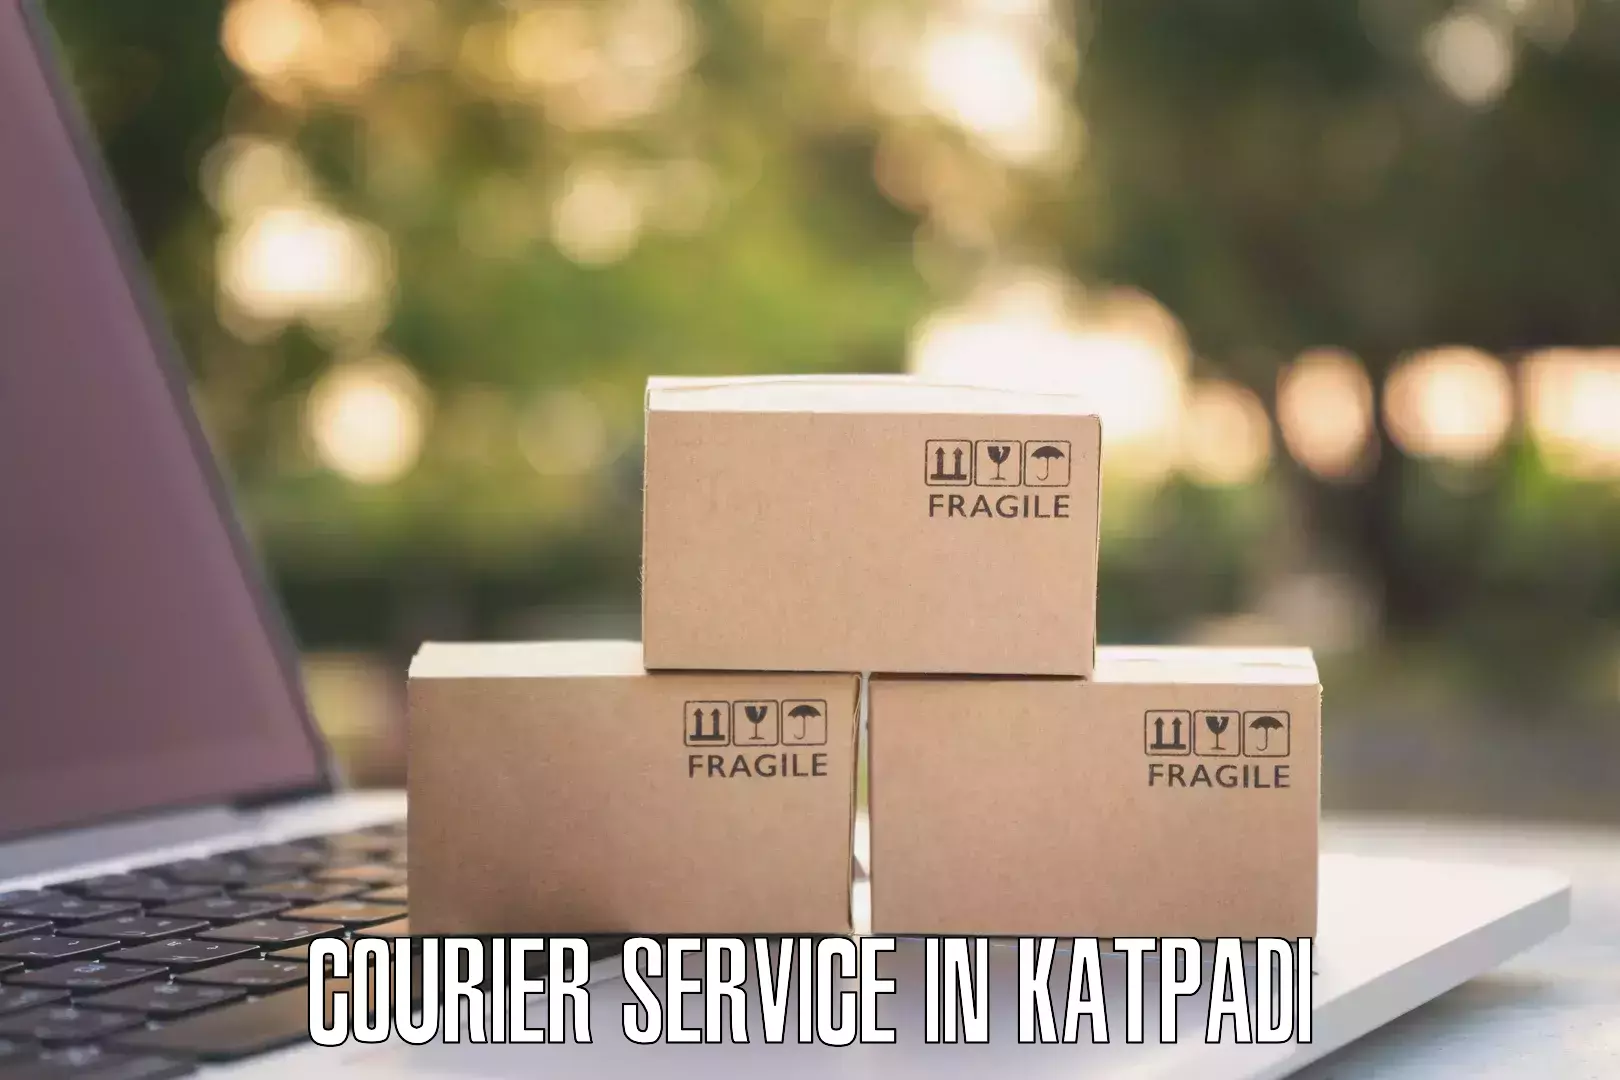 Specialized shipment handling in Katpadi